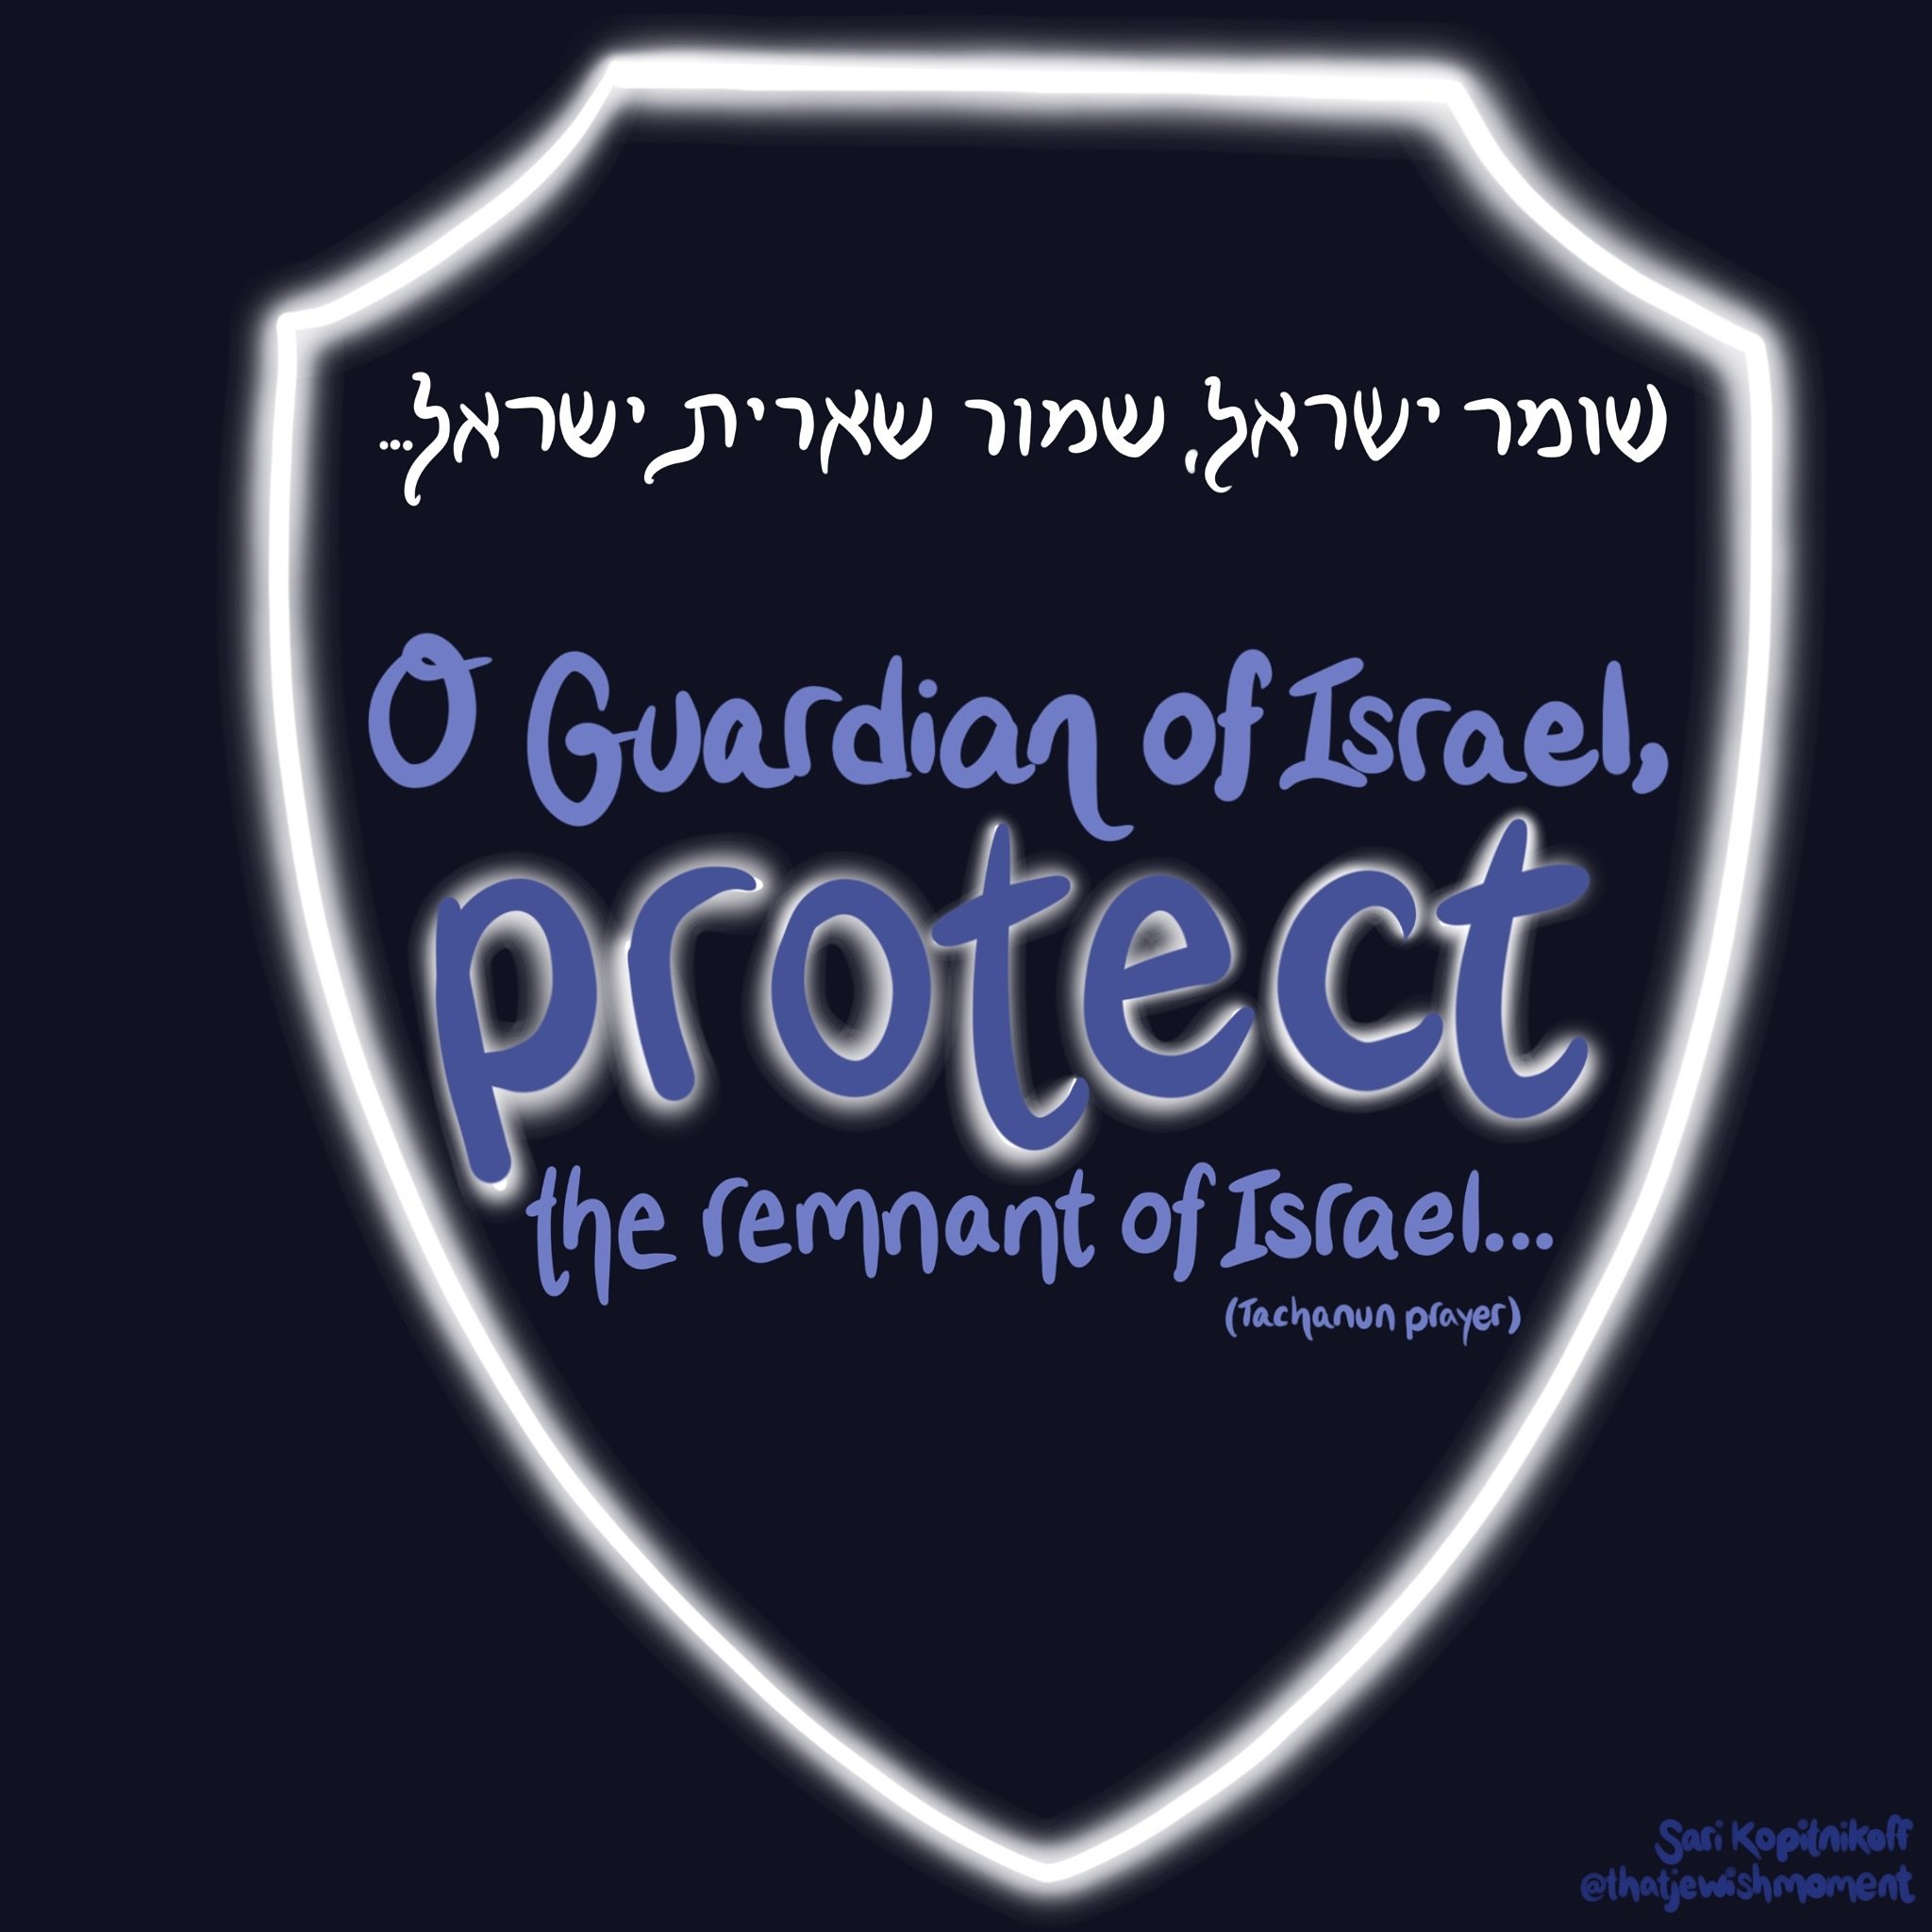 A heartfelt plea 💙 

#prayforisrael